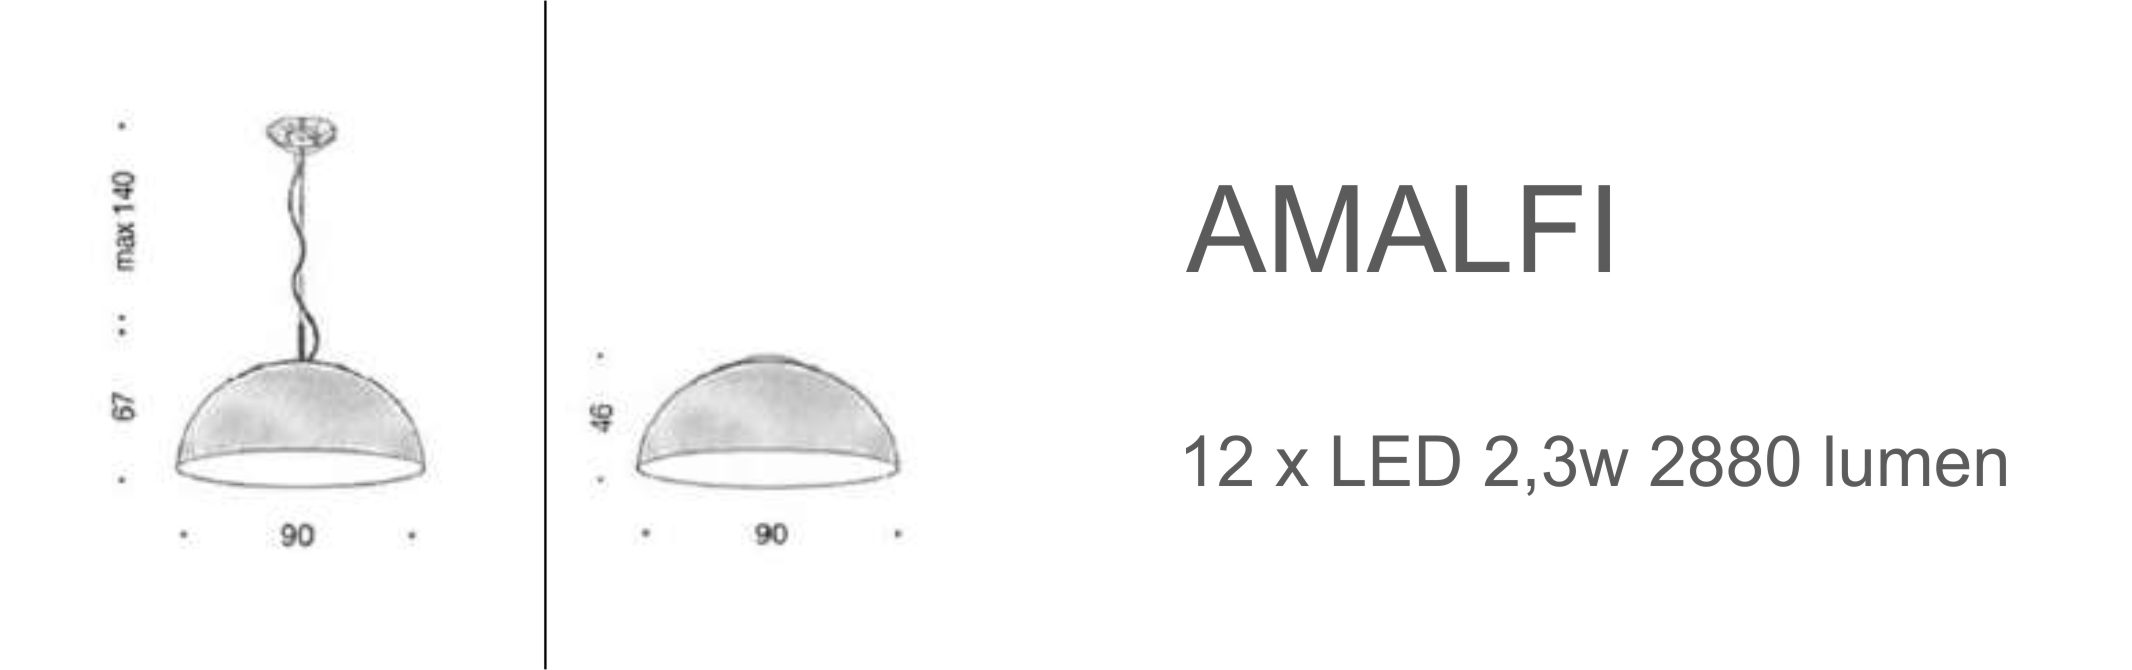 Amalfi - D90 (LED)